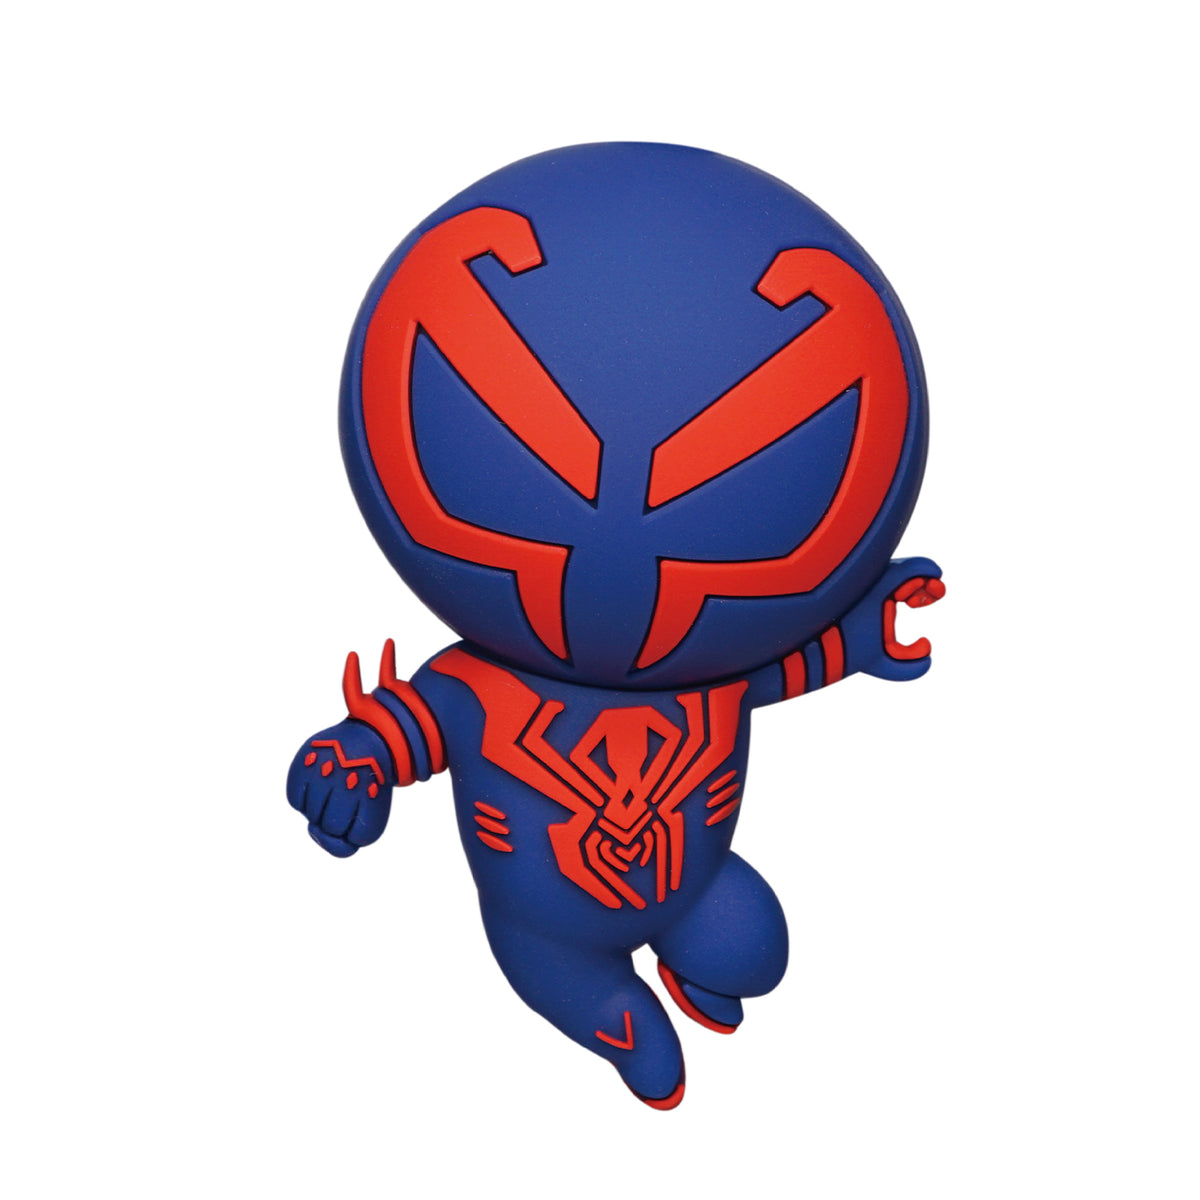 Marvel Spider-Man 2099 Collectible 3D Foam Magnet